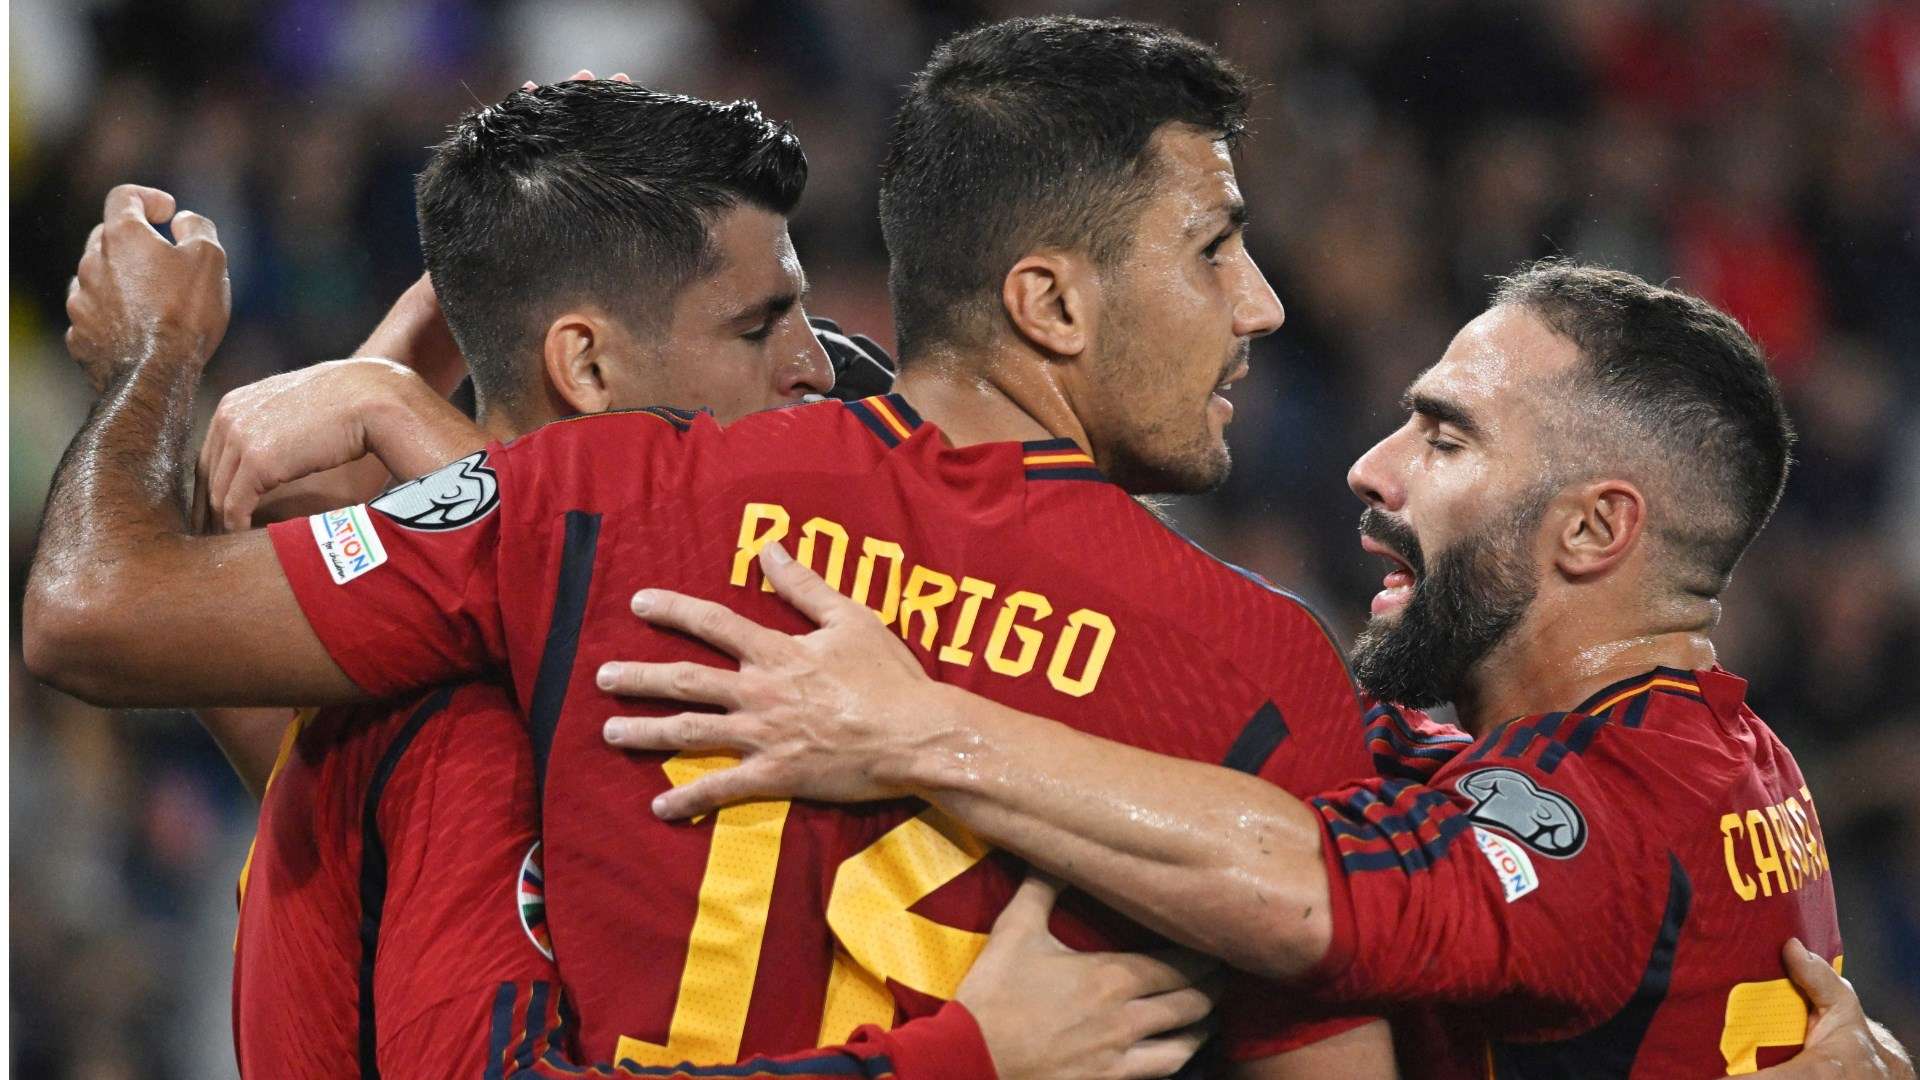 Rodri Spain vs Georgia